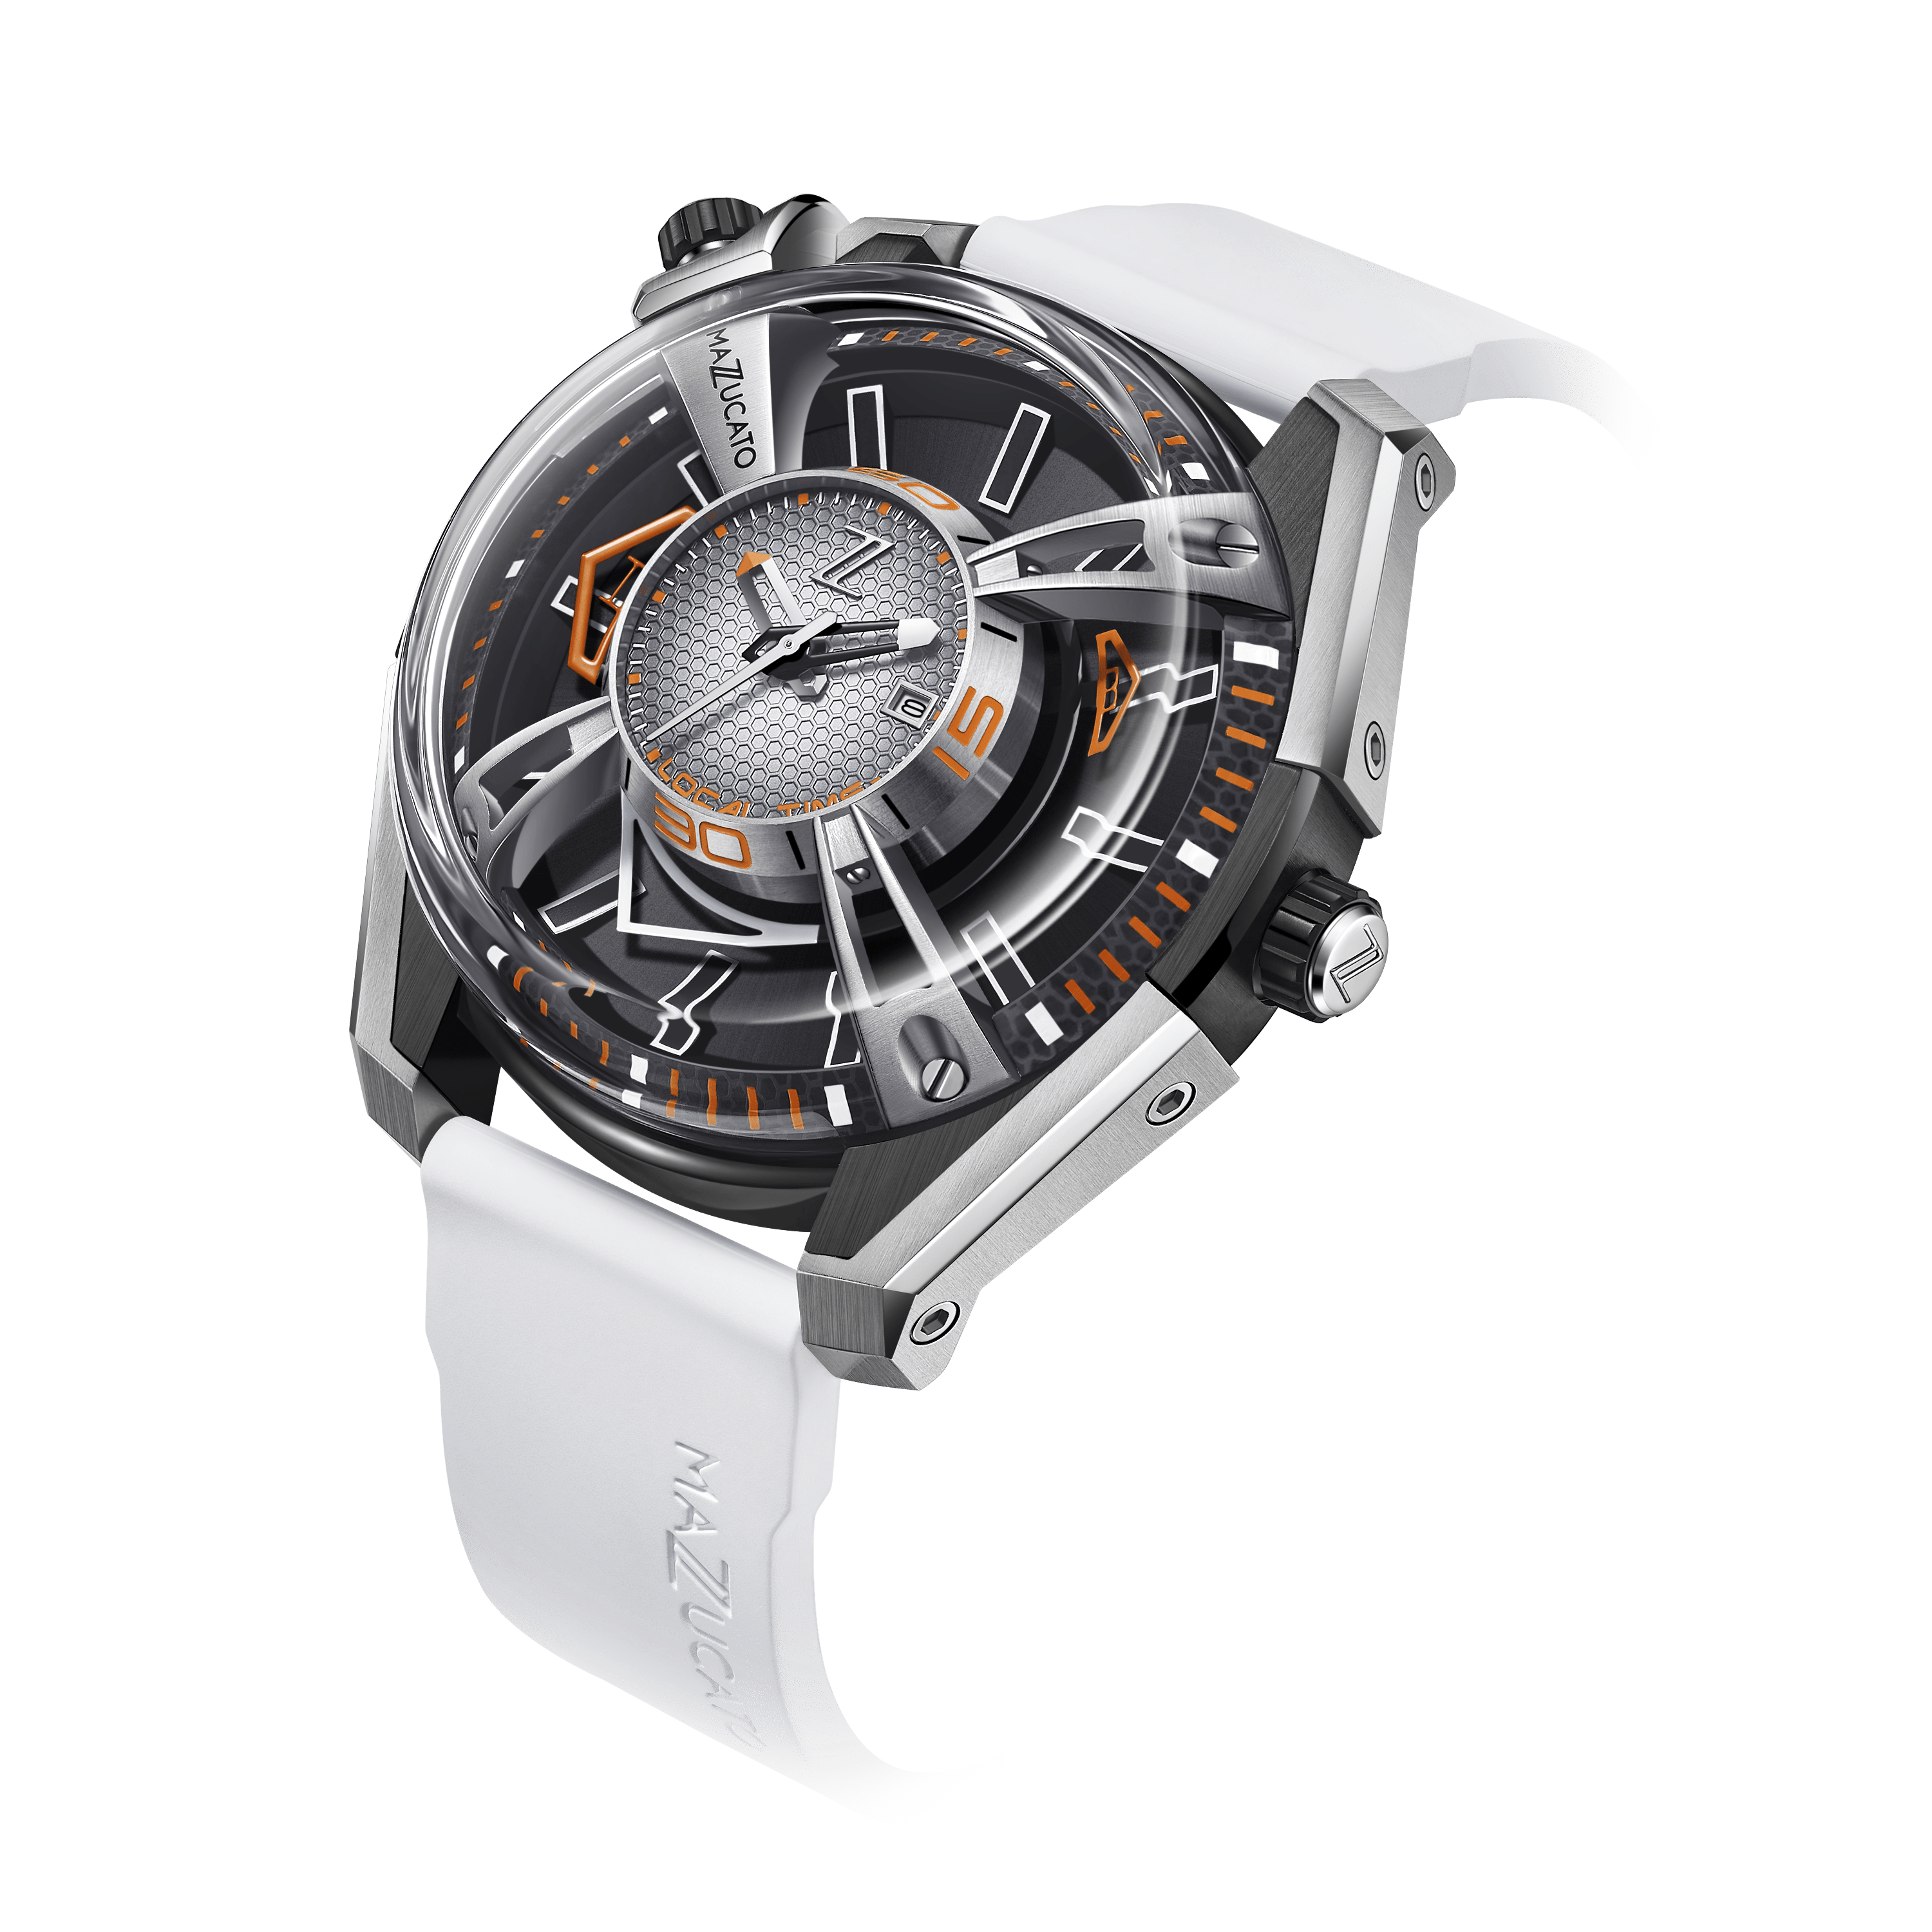 Speake-Marin Dual Time Mint 42 mm Watch in Skeleton Dial